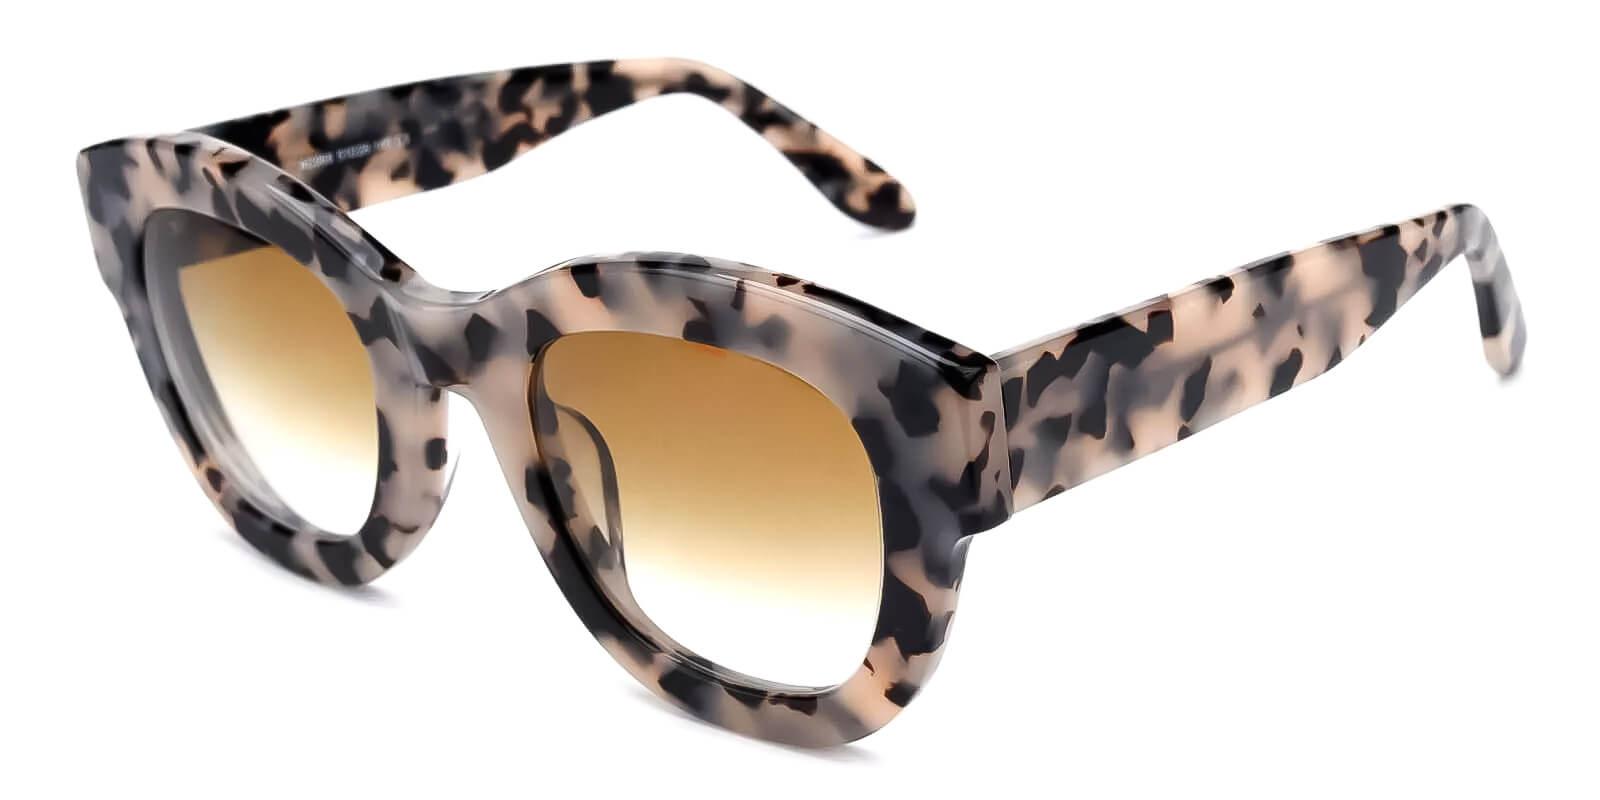 Meridian Pink Acetate Fashion , Sunglasses , UniversalBridgeFit Frames from ABBE Glasses